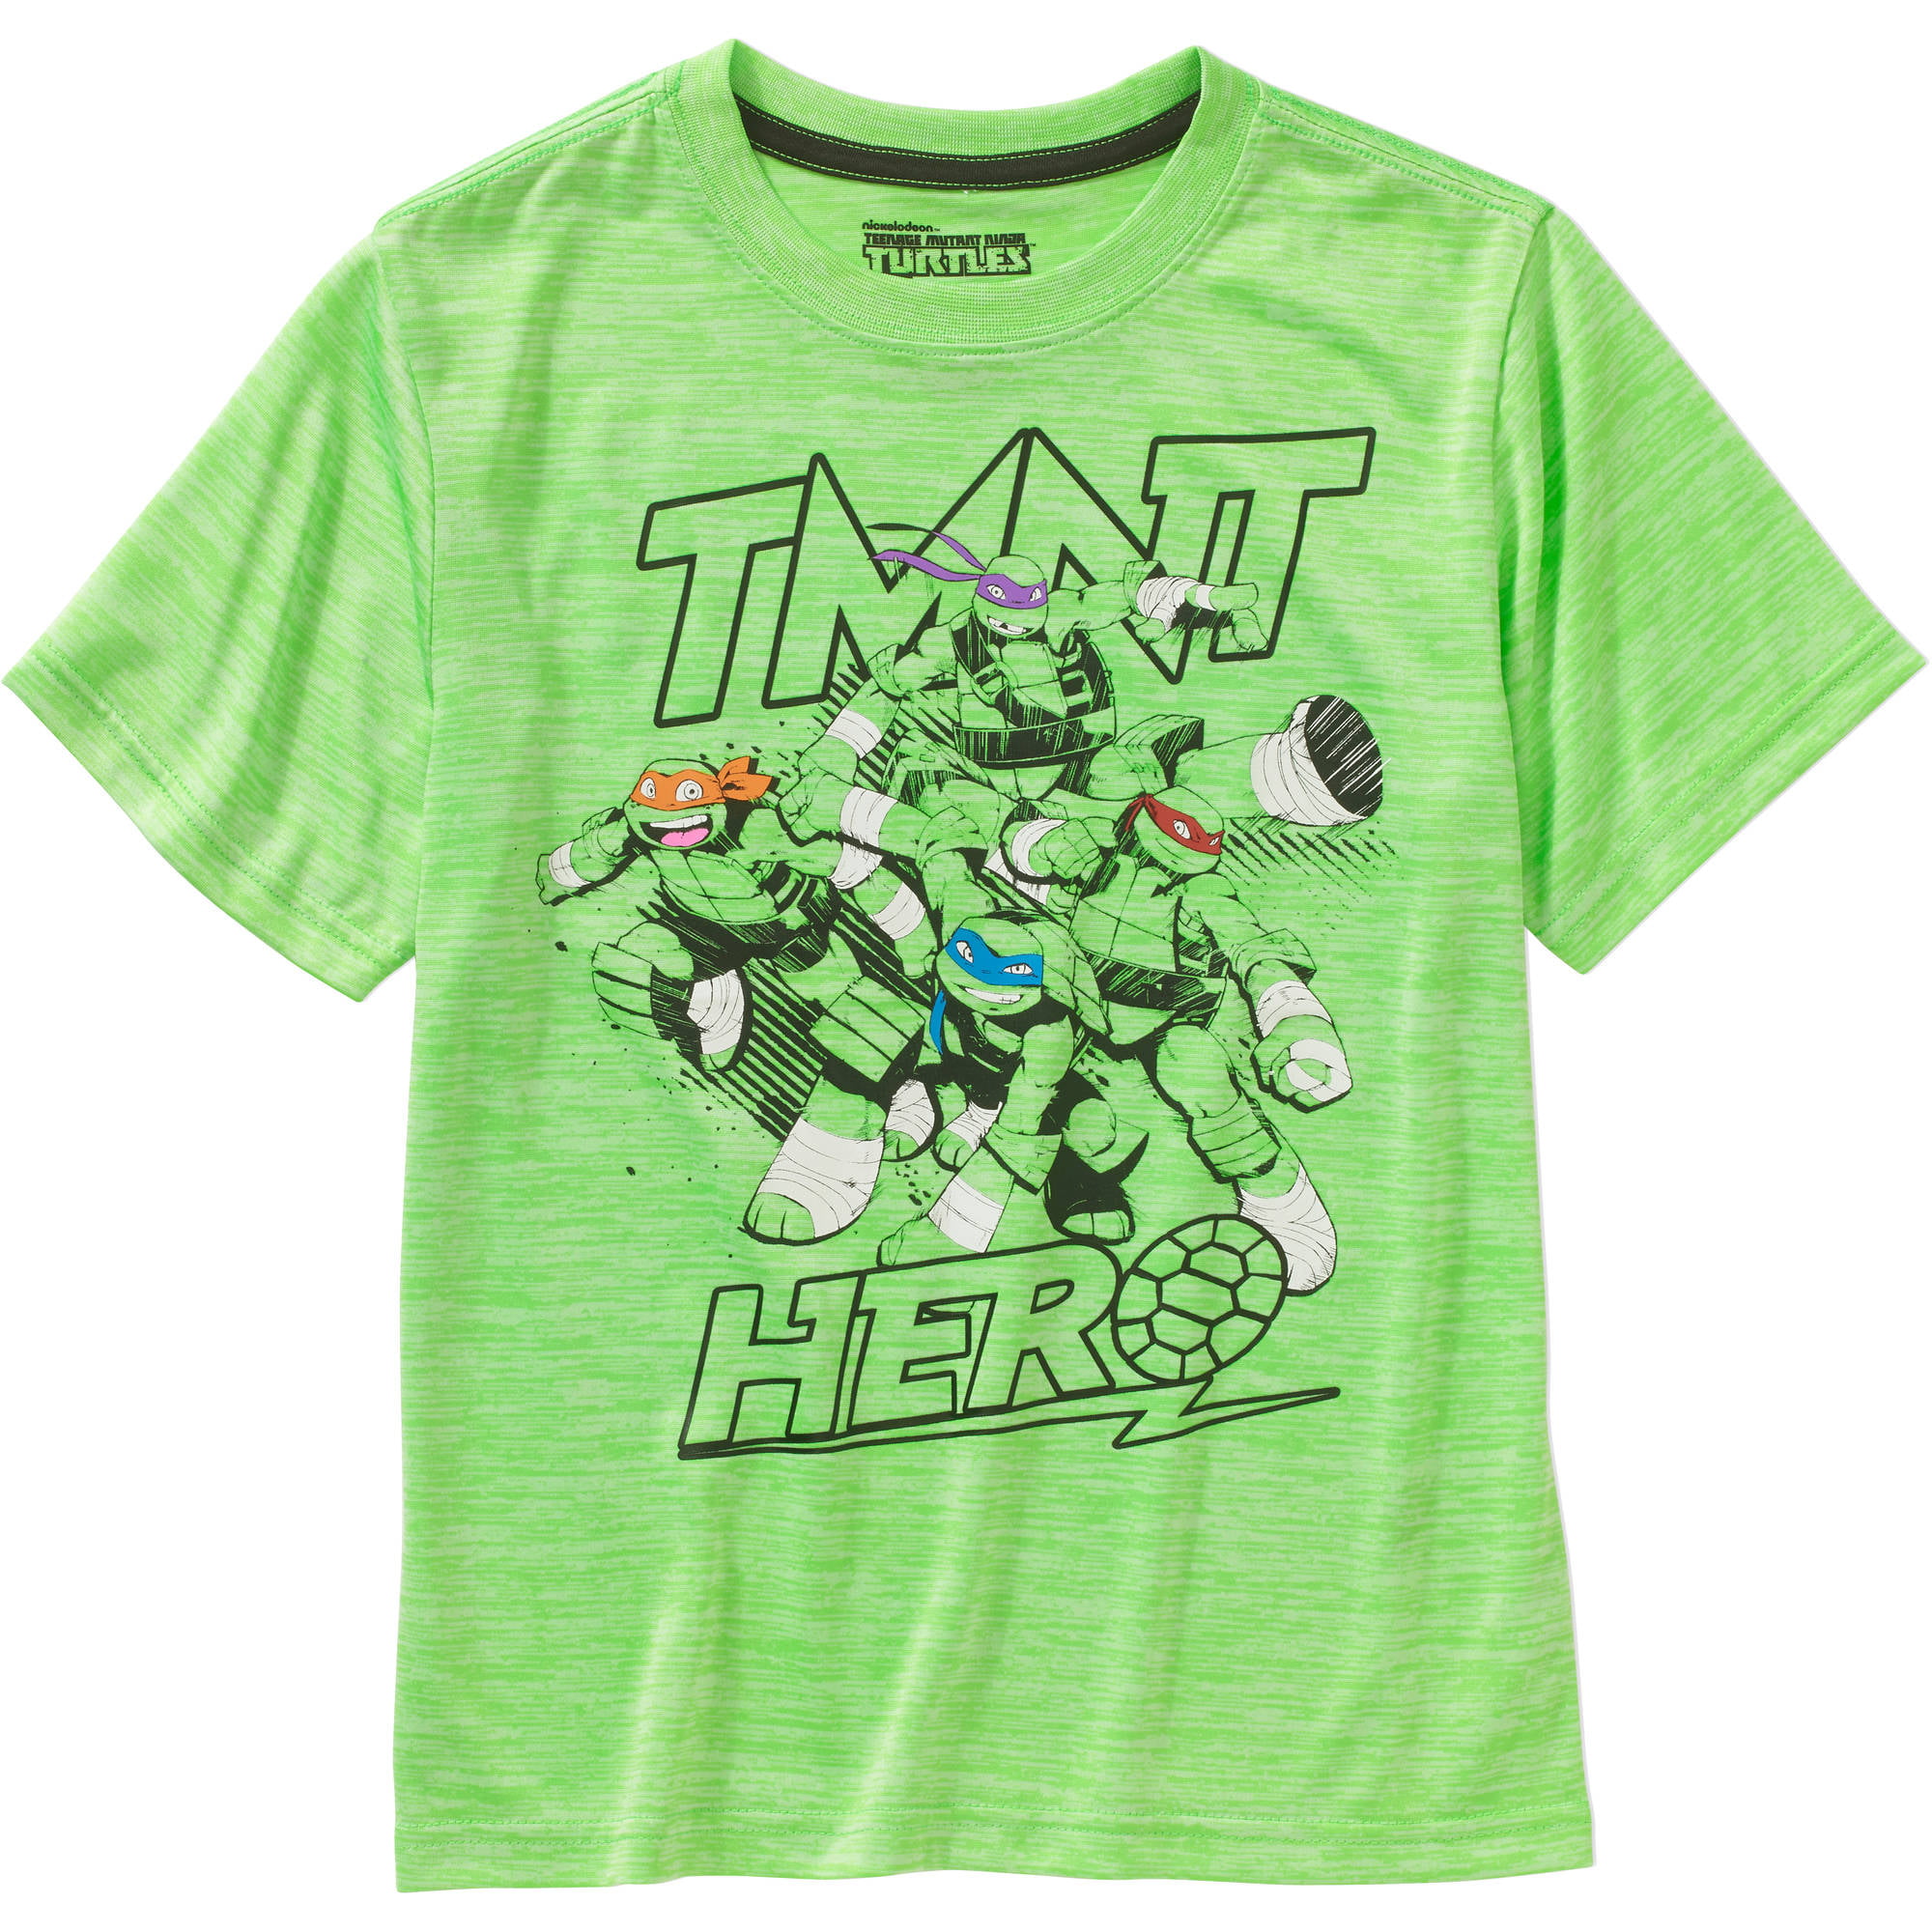 Teenage Mutant Ninja Turtles Cotton Leisure and Comfort Crew Neck Long Sleeve Graphic T-Shirt for Boys Girls